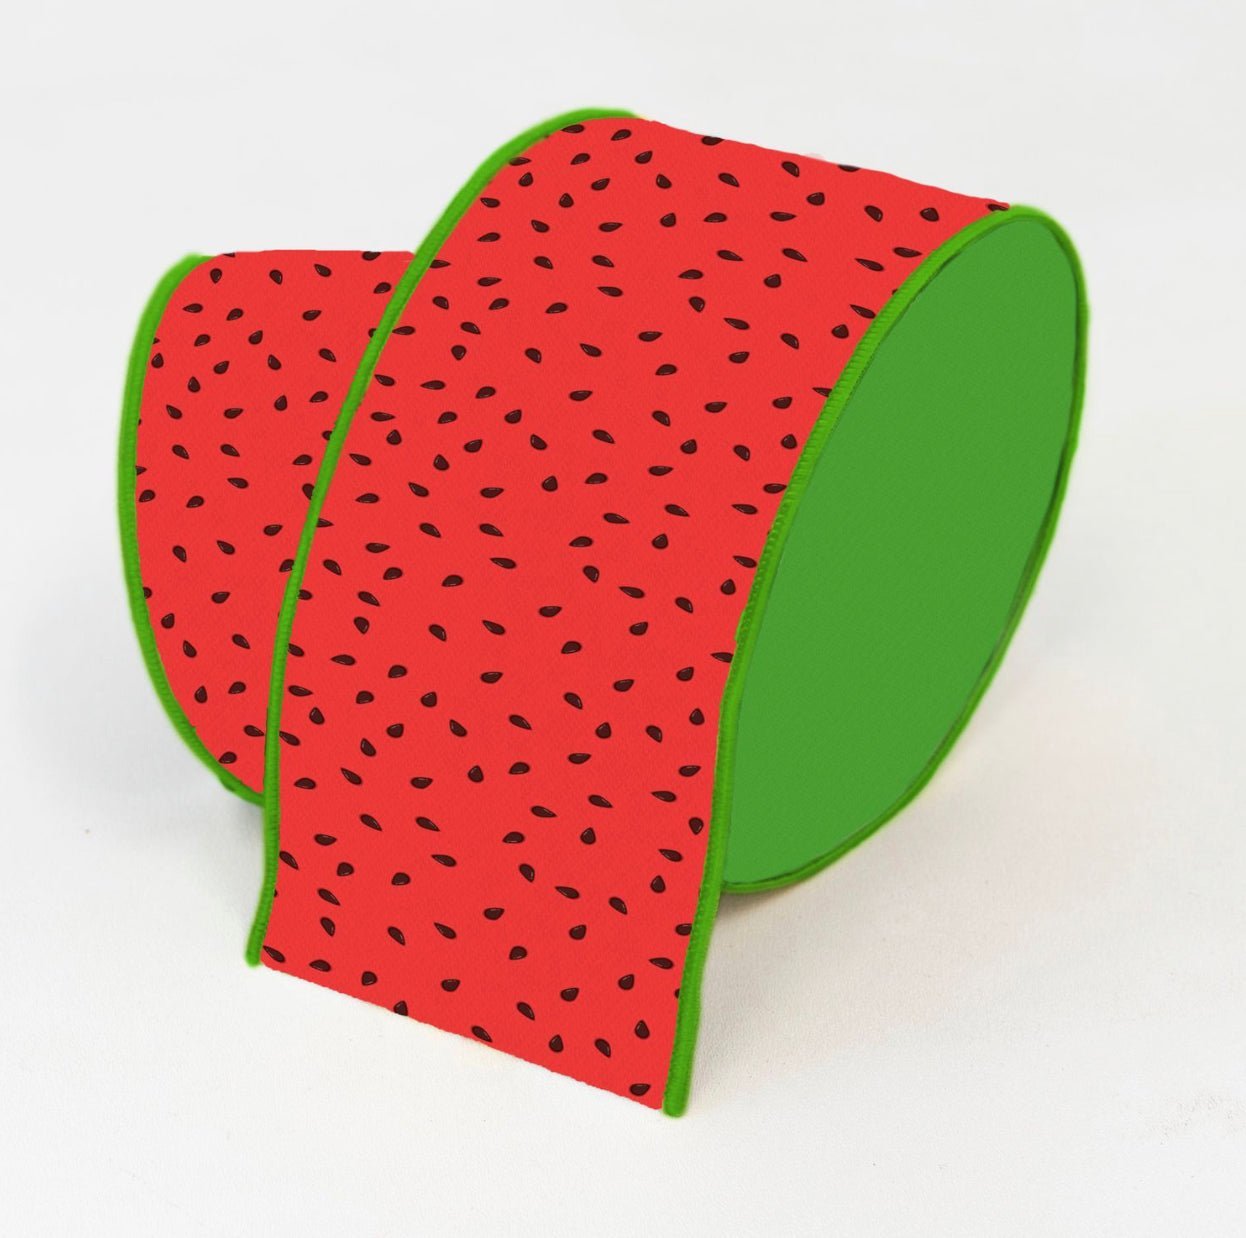 Watermelon seeds 4” farrisilk wired ribbon - Greenery MarketRibbons & TrimRk227-48